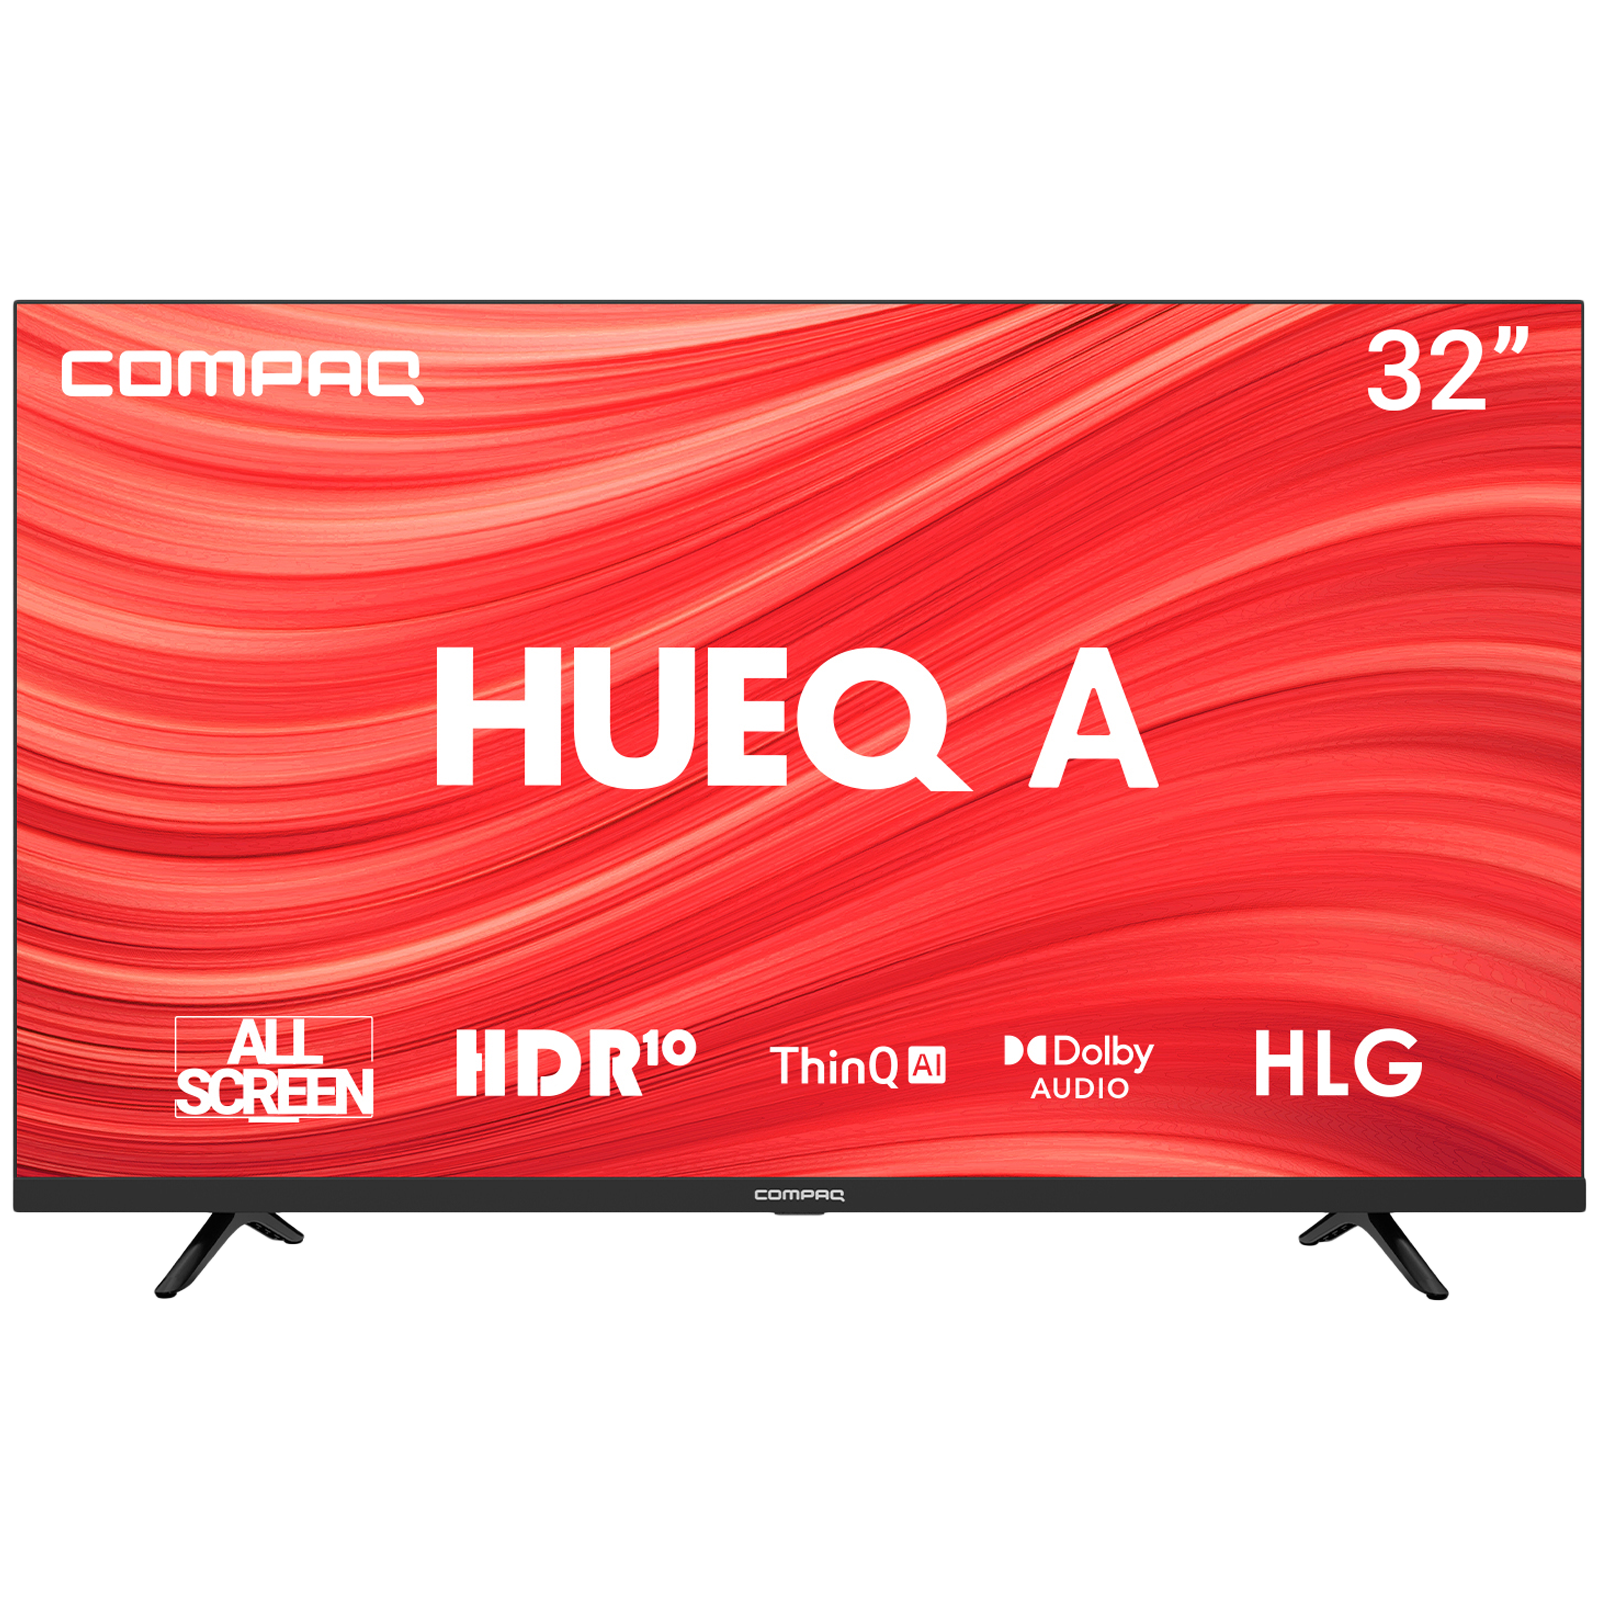 Compaq HUEQ A 80 cm (32 inch) HD Ready Smart webOS TV with Dolby Audio (2022 model)